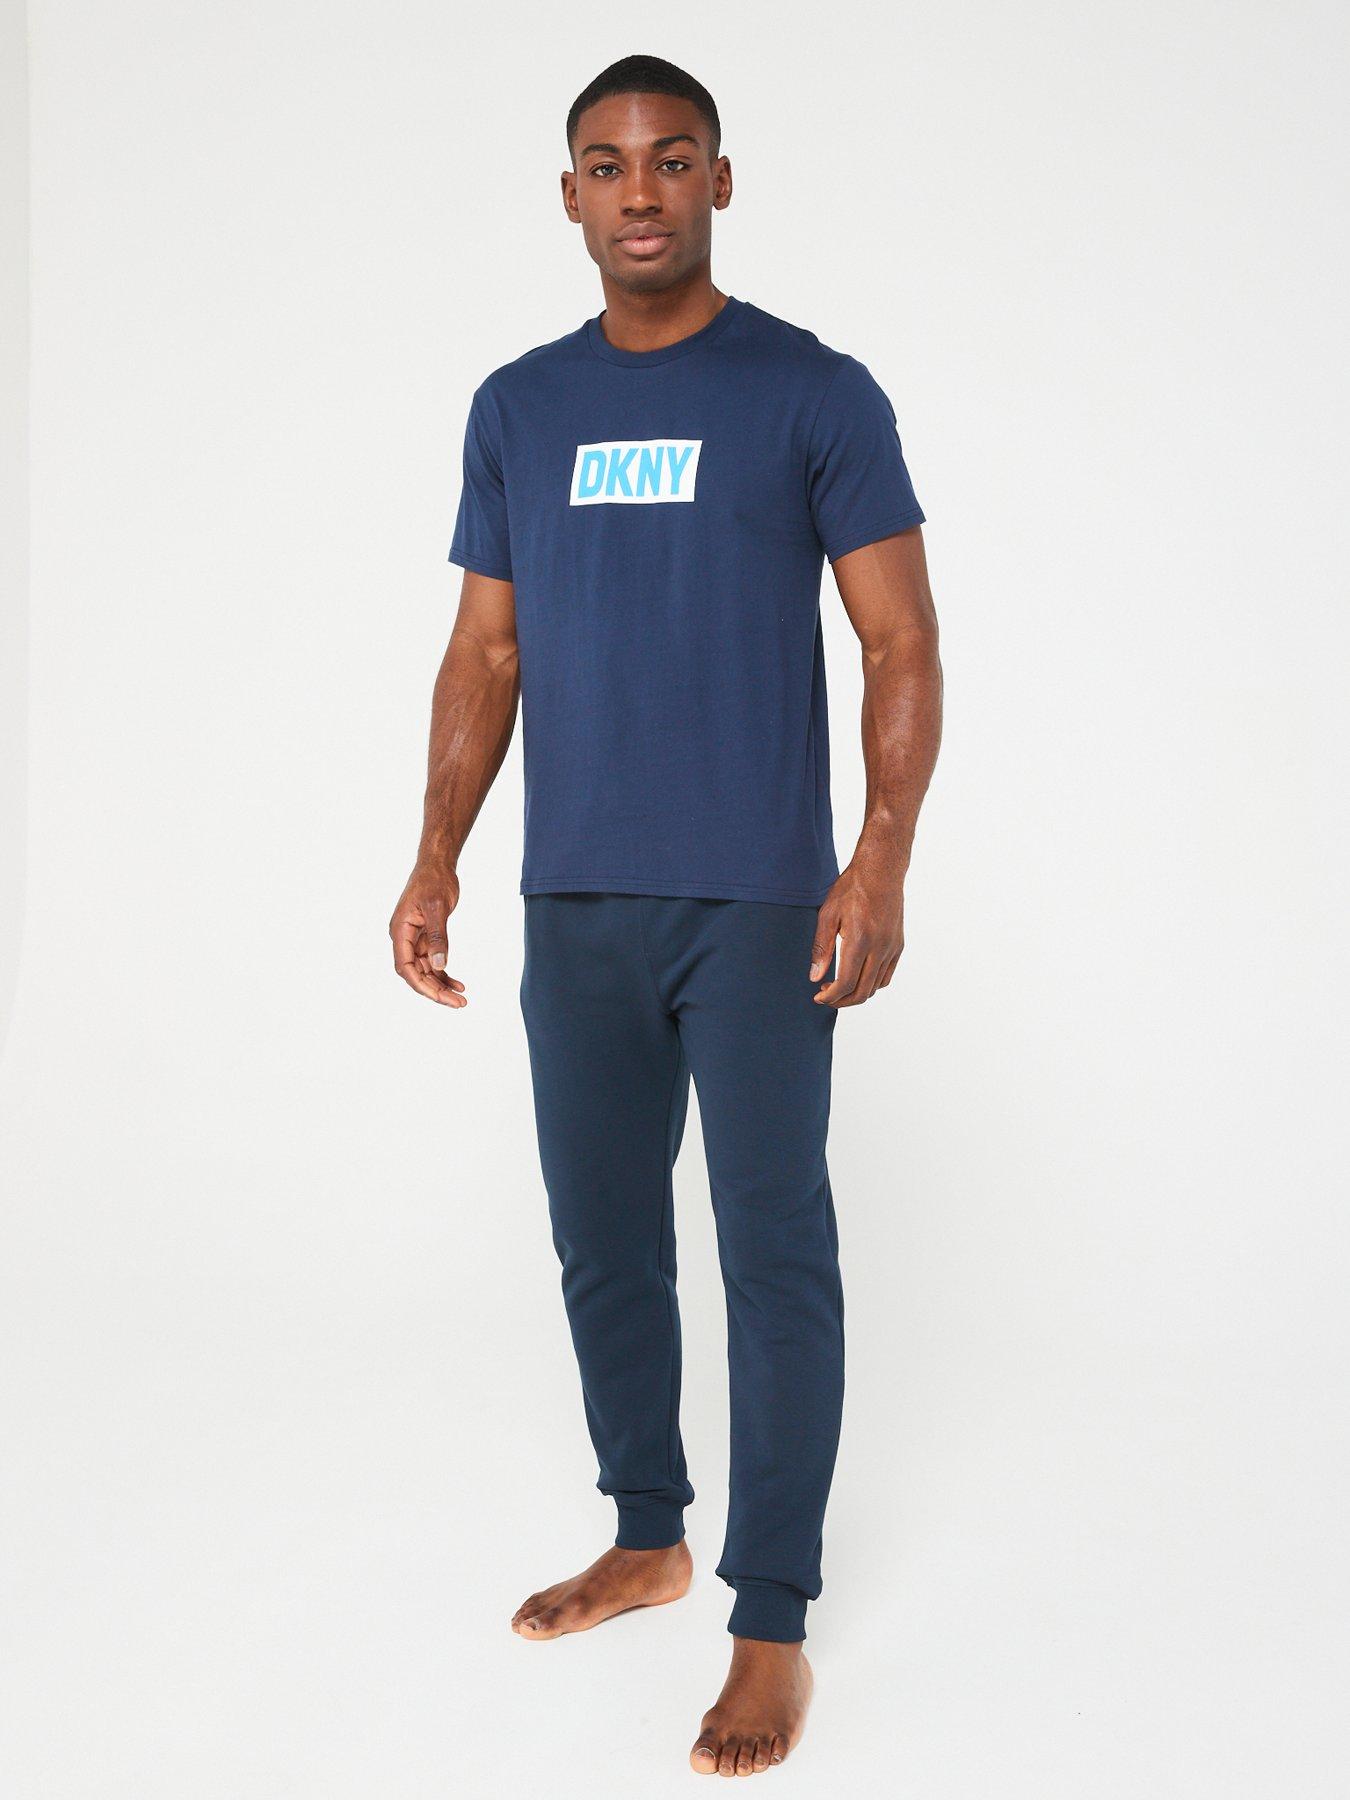 DKNY Icemen Lounge T-Shirt - Blue